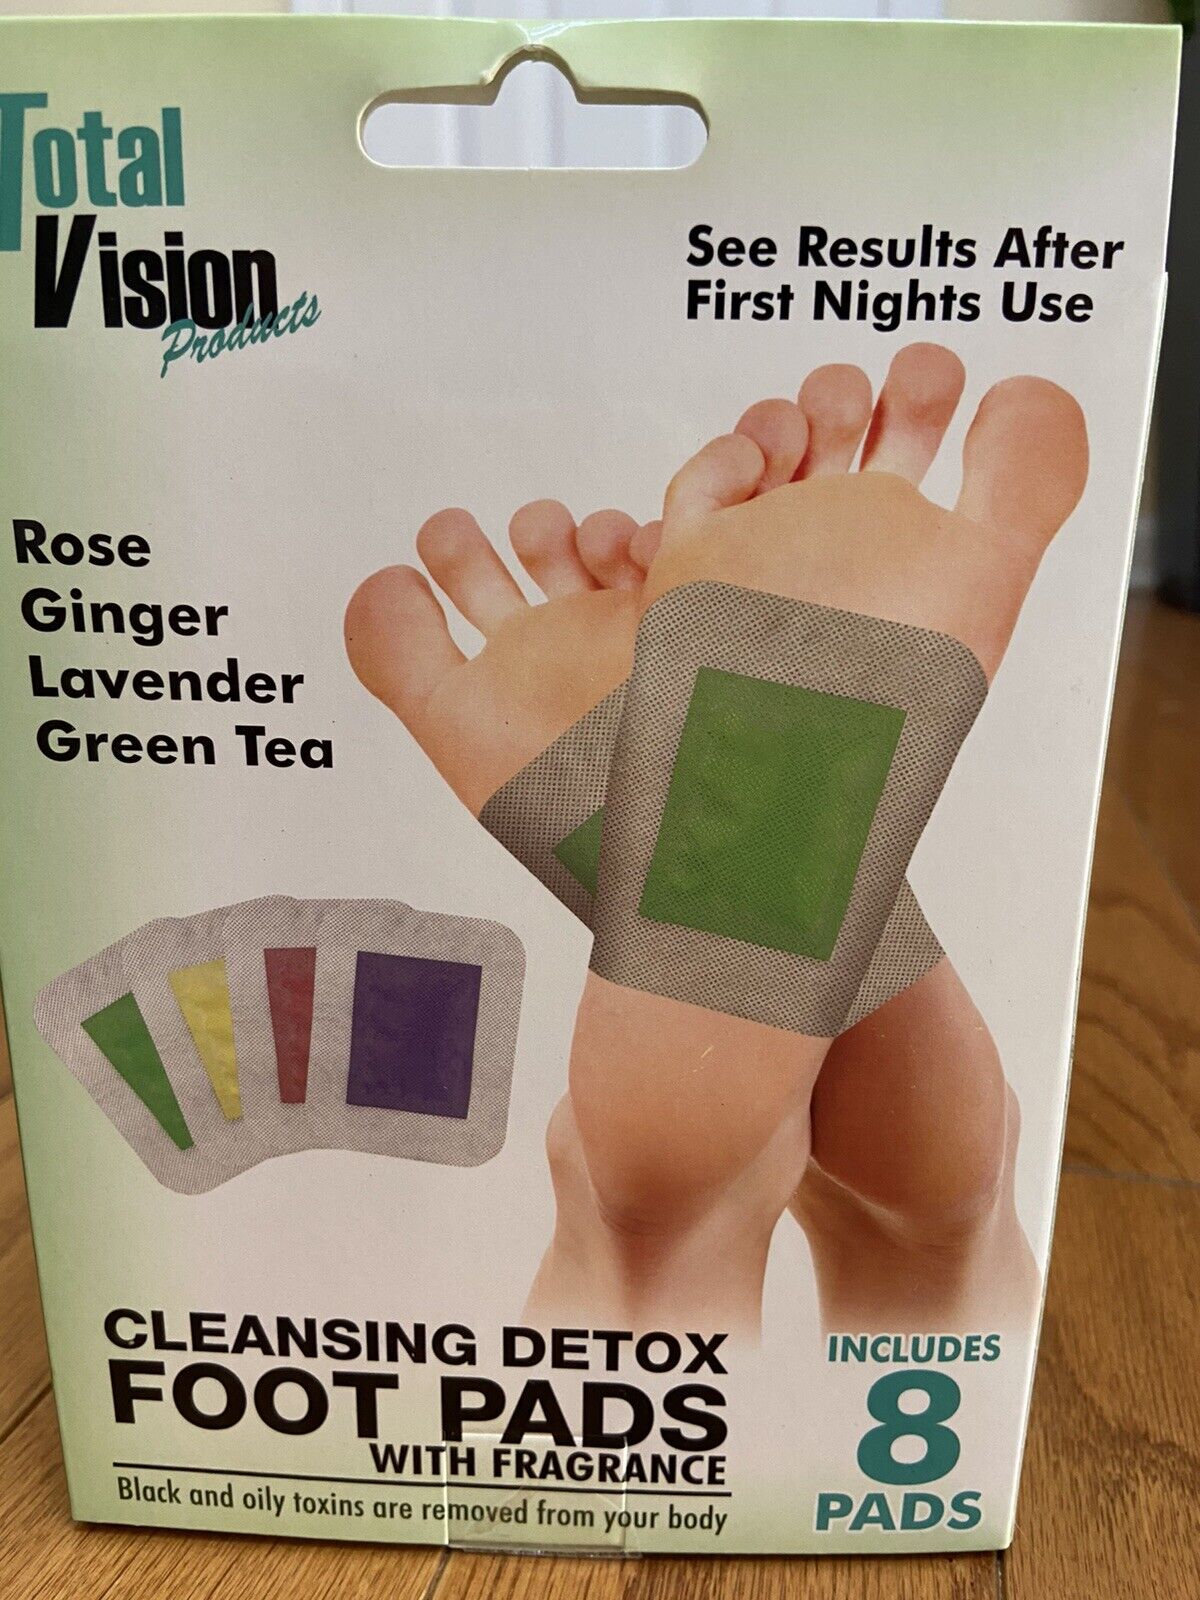 Total Vision Detox Foot Pads Packaging